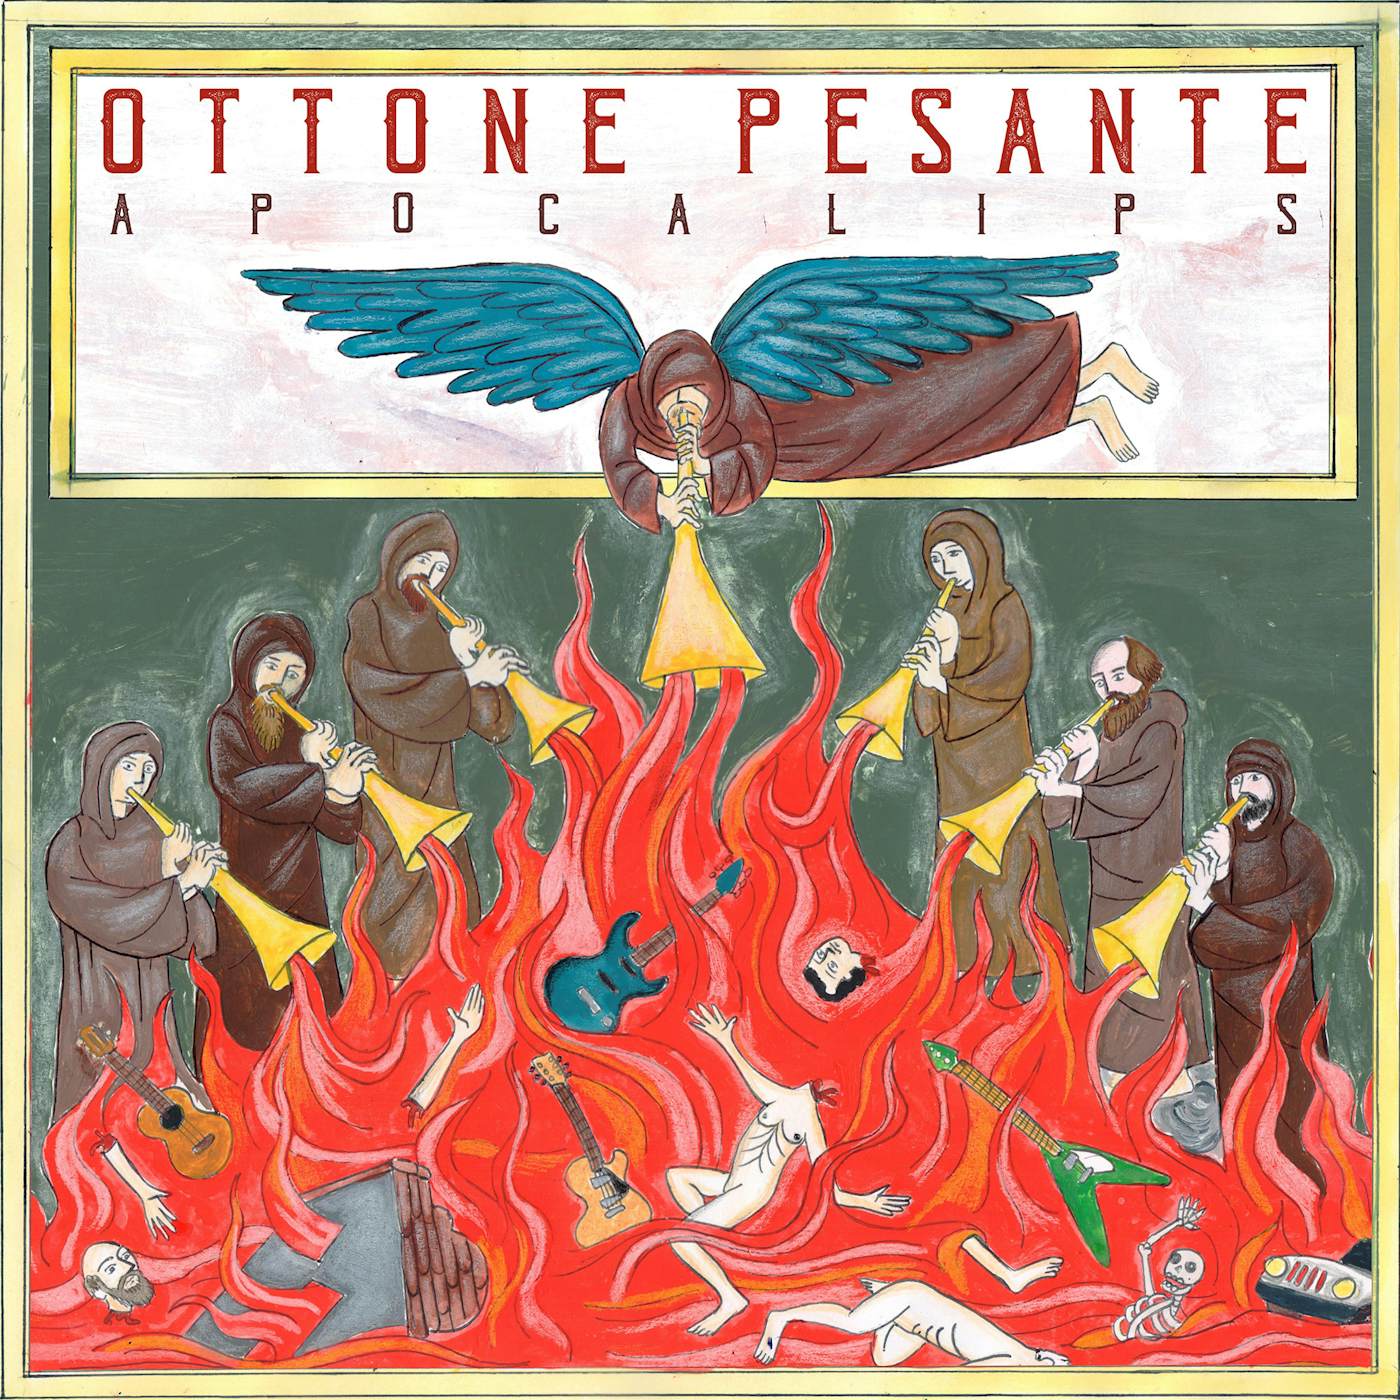 Ottone Pesante Apocalips Vinyl Record